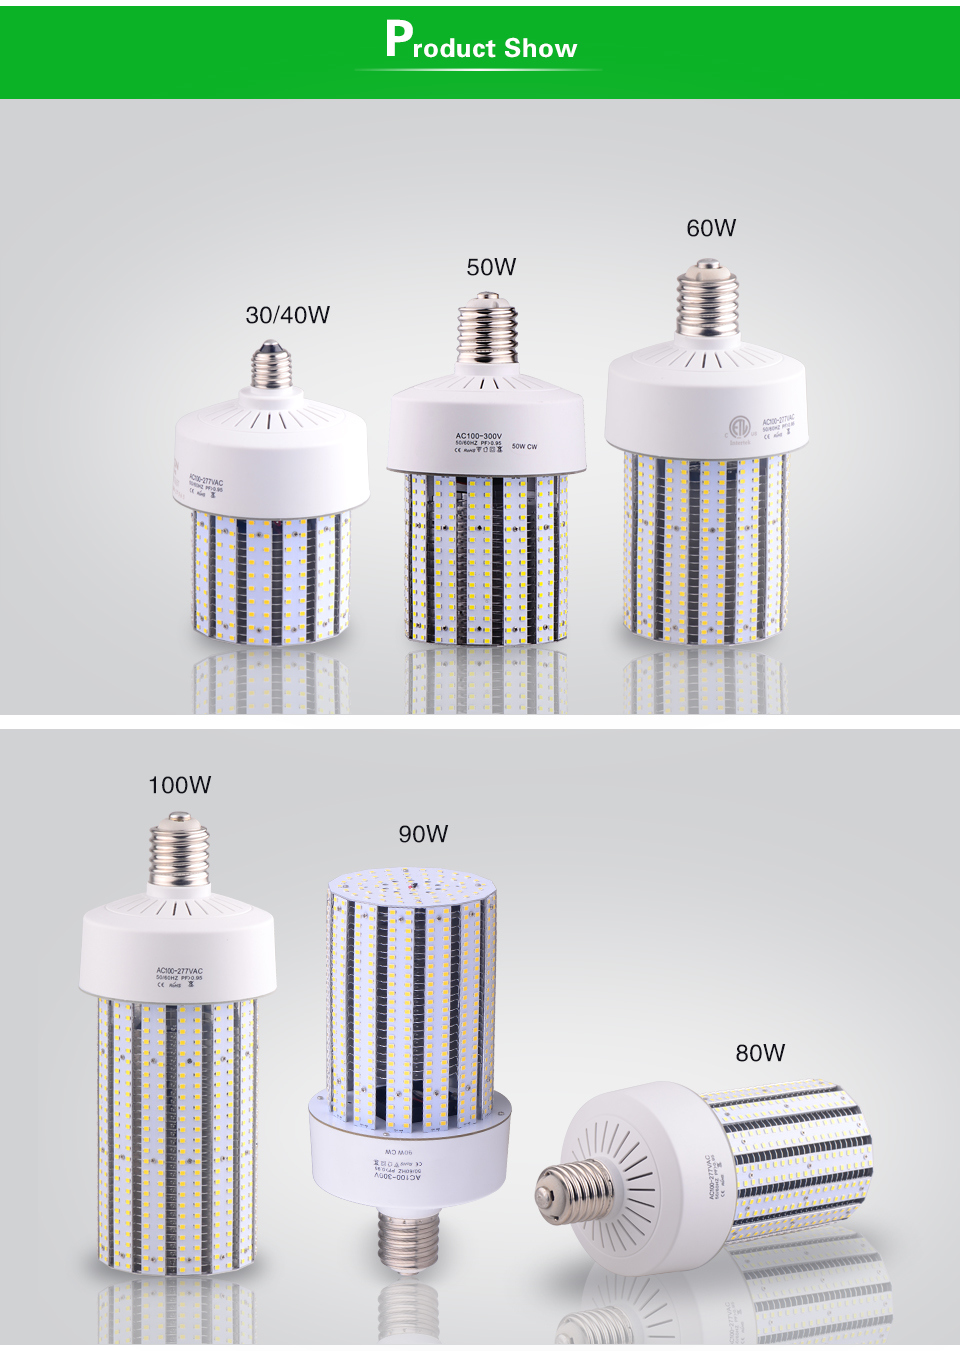 60W High Power LED Street Light and LED Corn Lamp